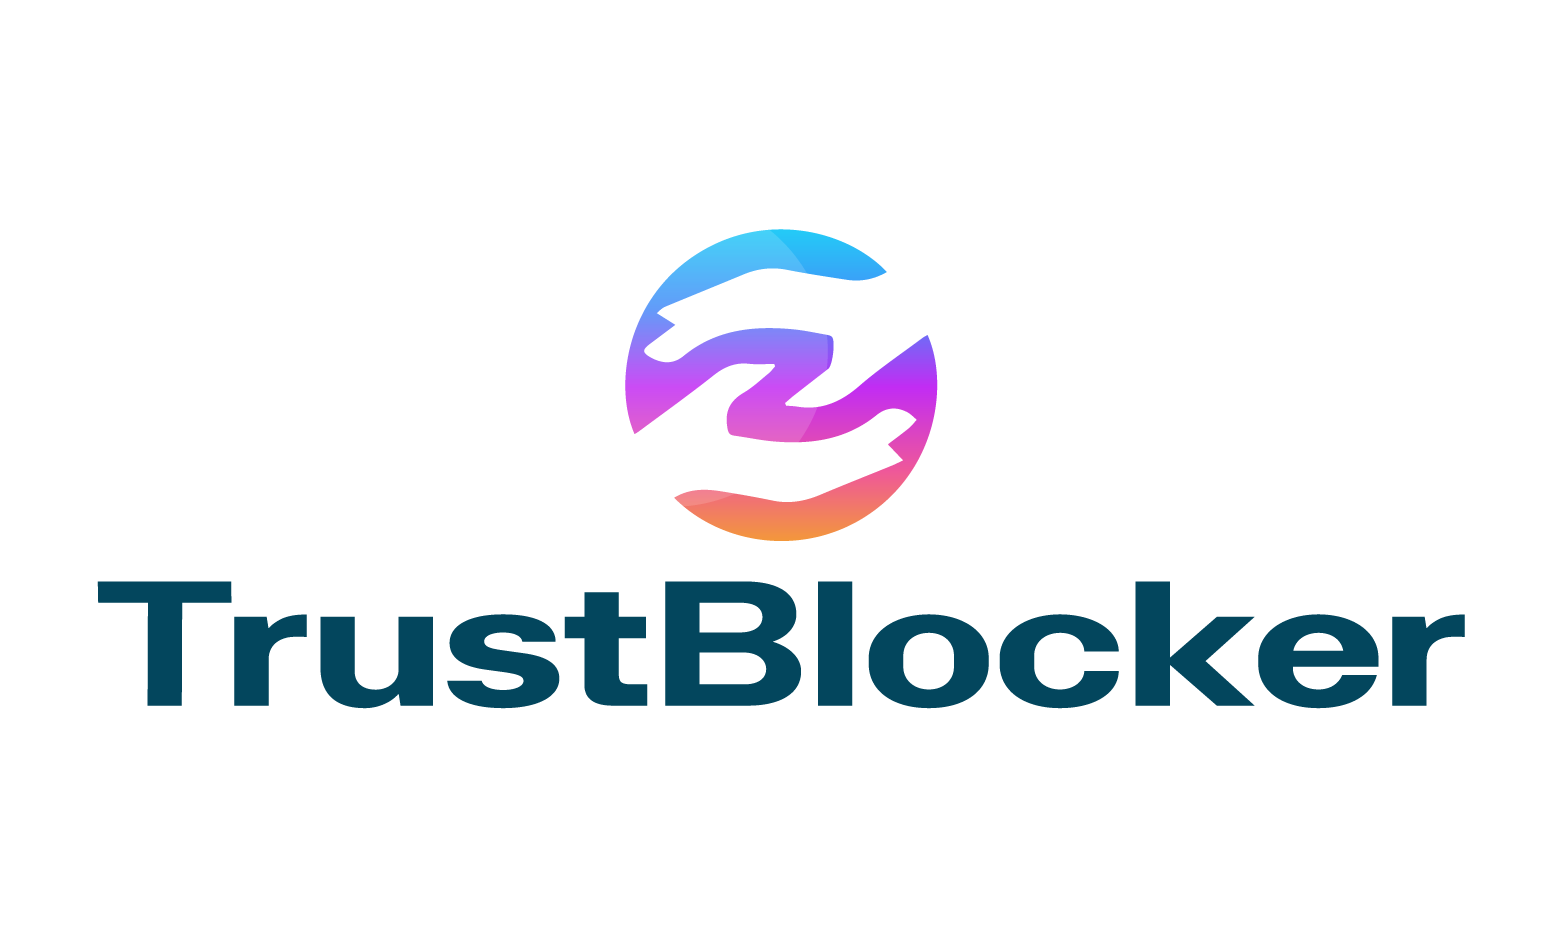 TrustBlocker.com - Creative brandable domain for sale